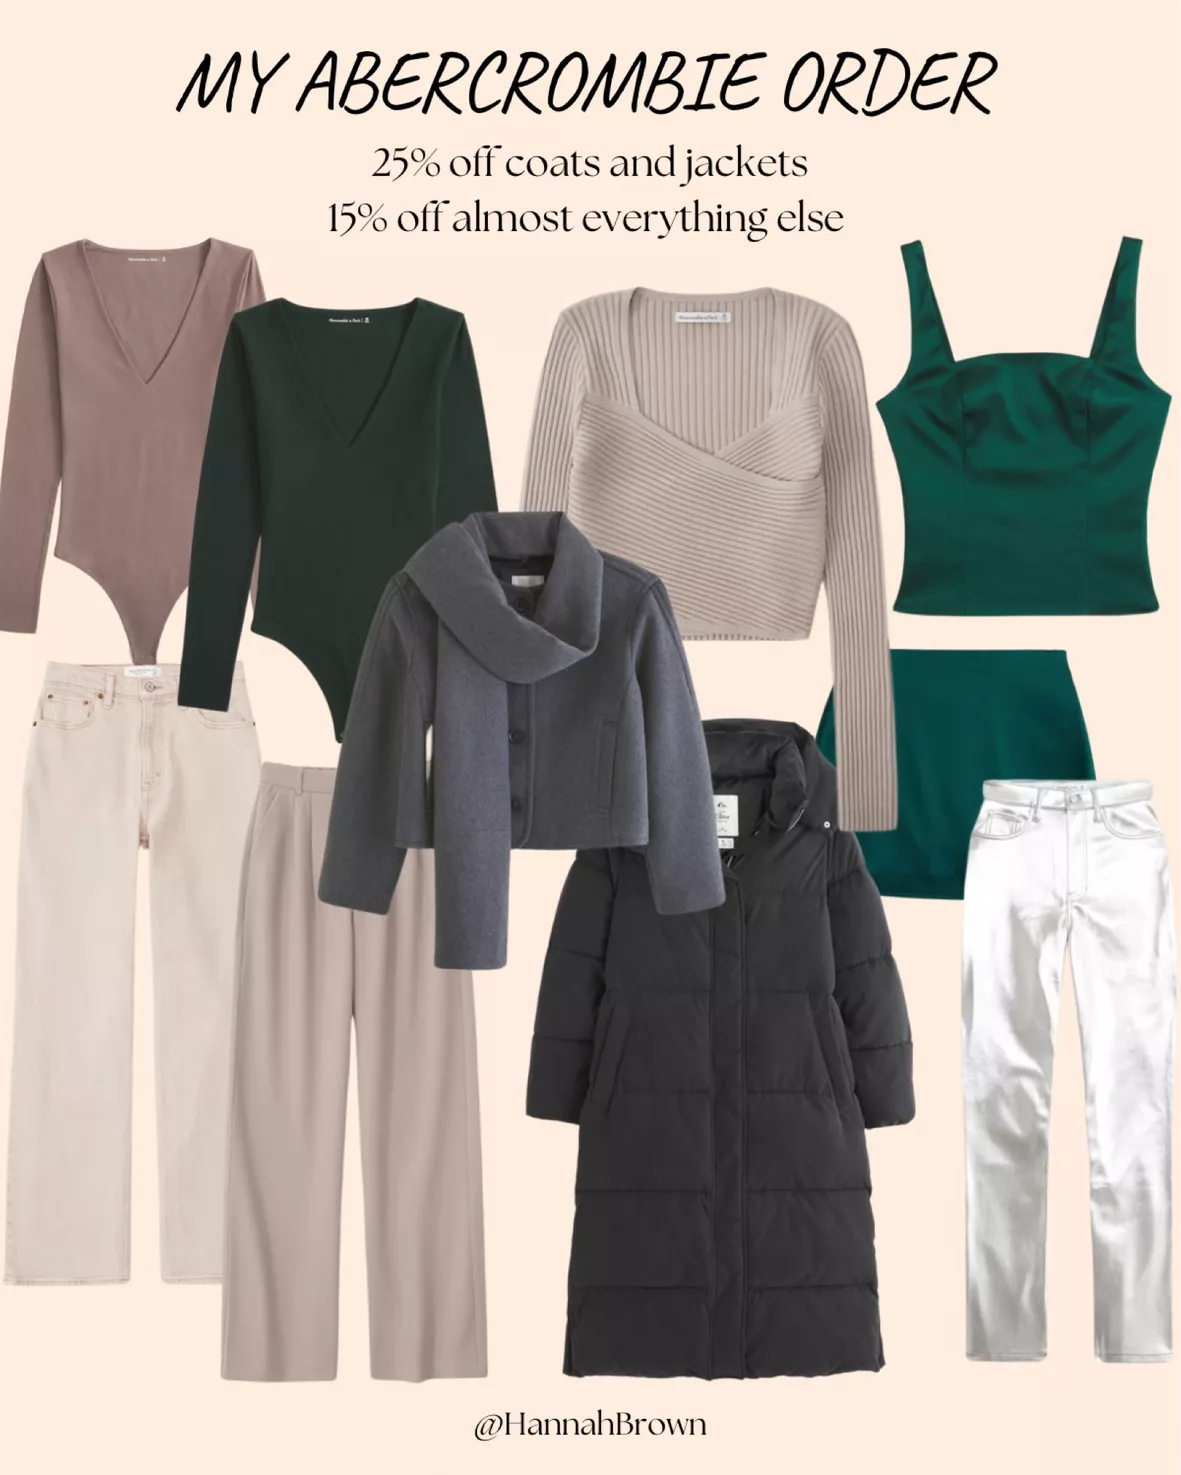 Women's Long-Sleeve Cotton-Blend Seamless Fabric V-Neck Bodysuit